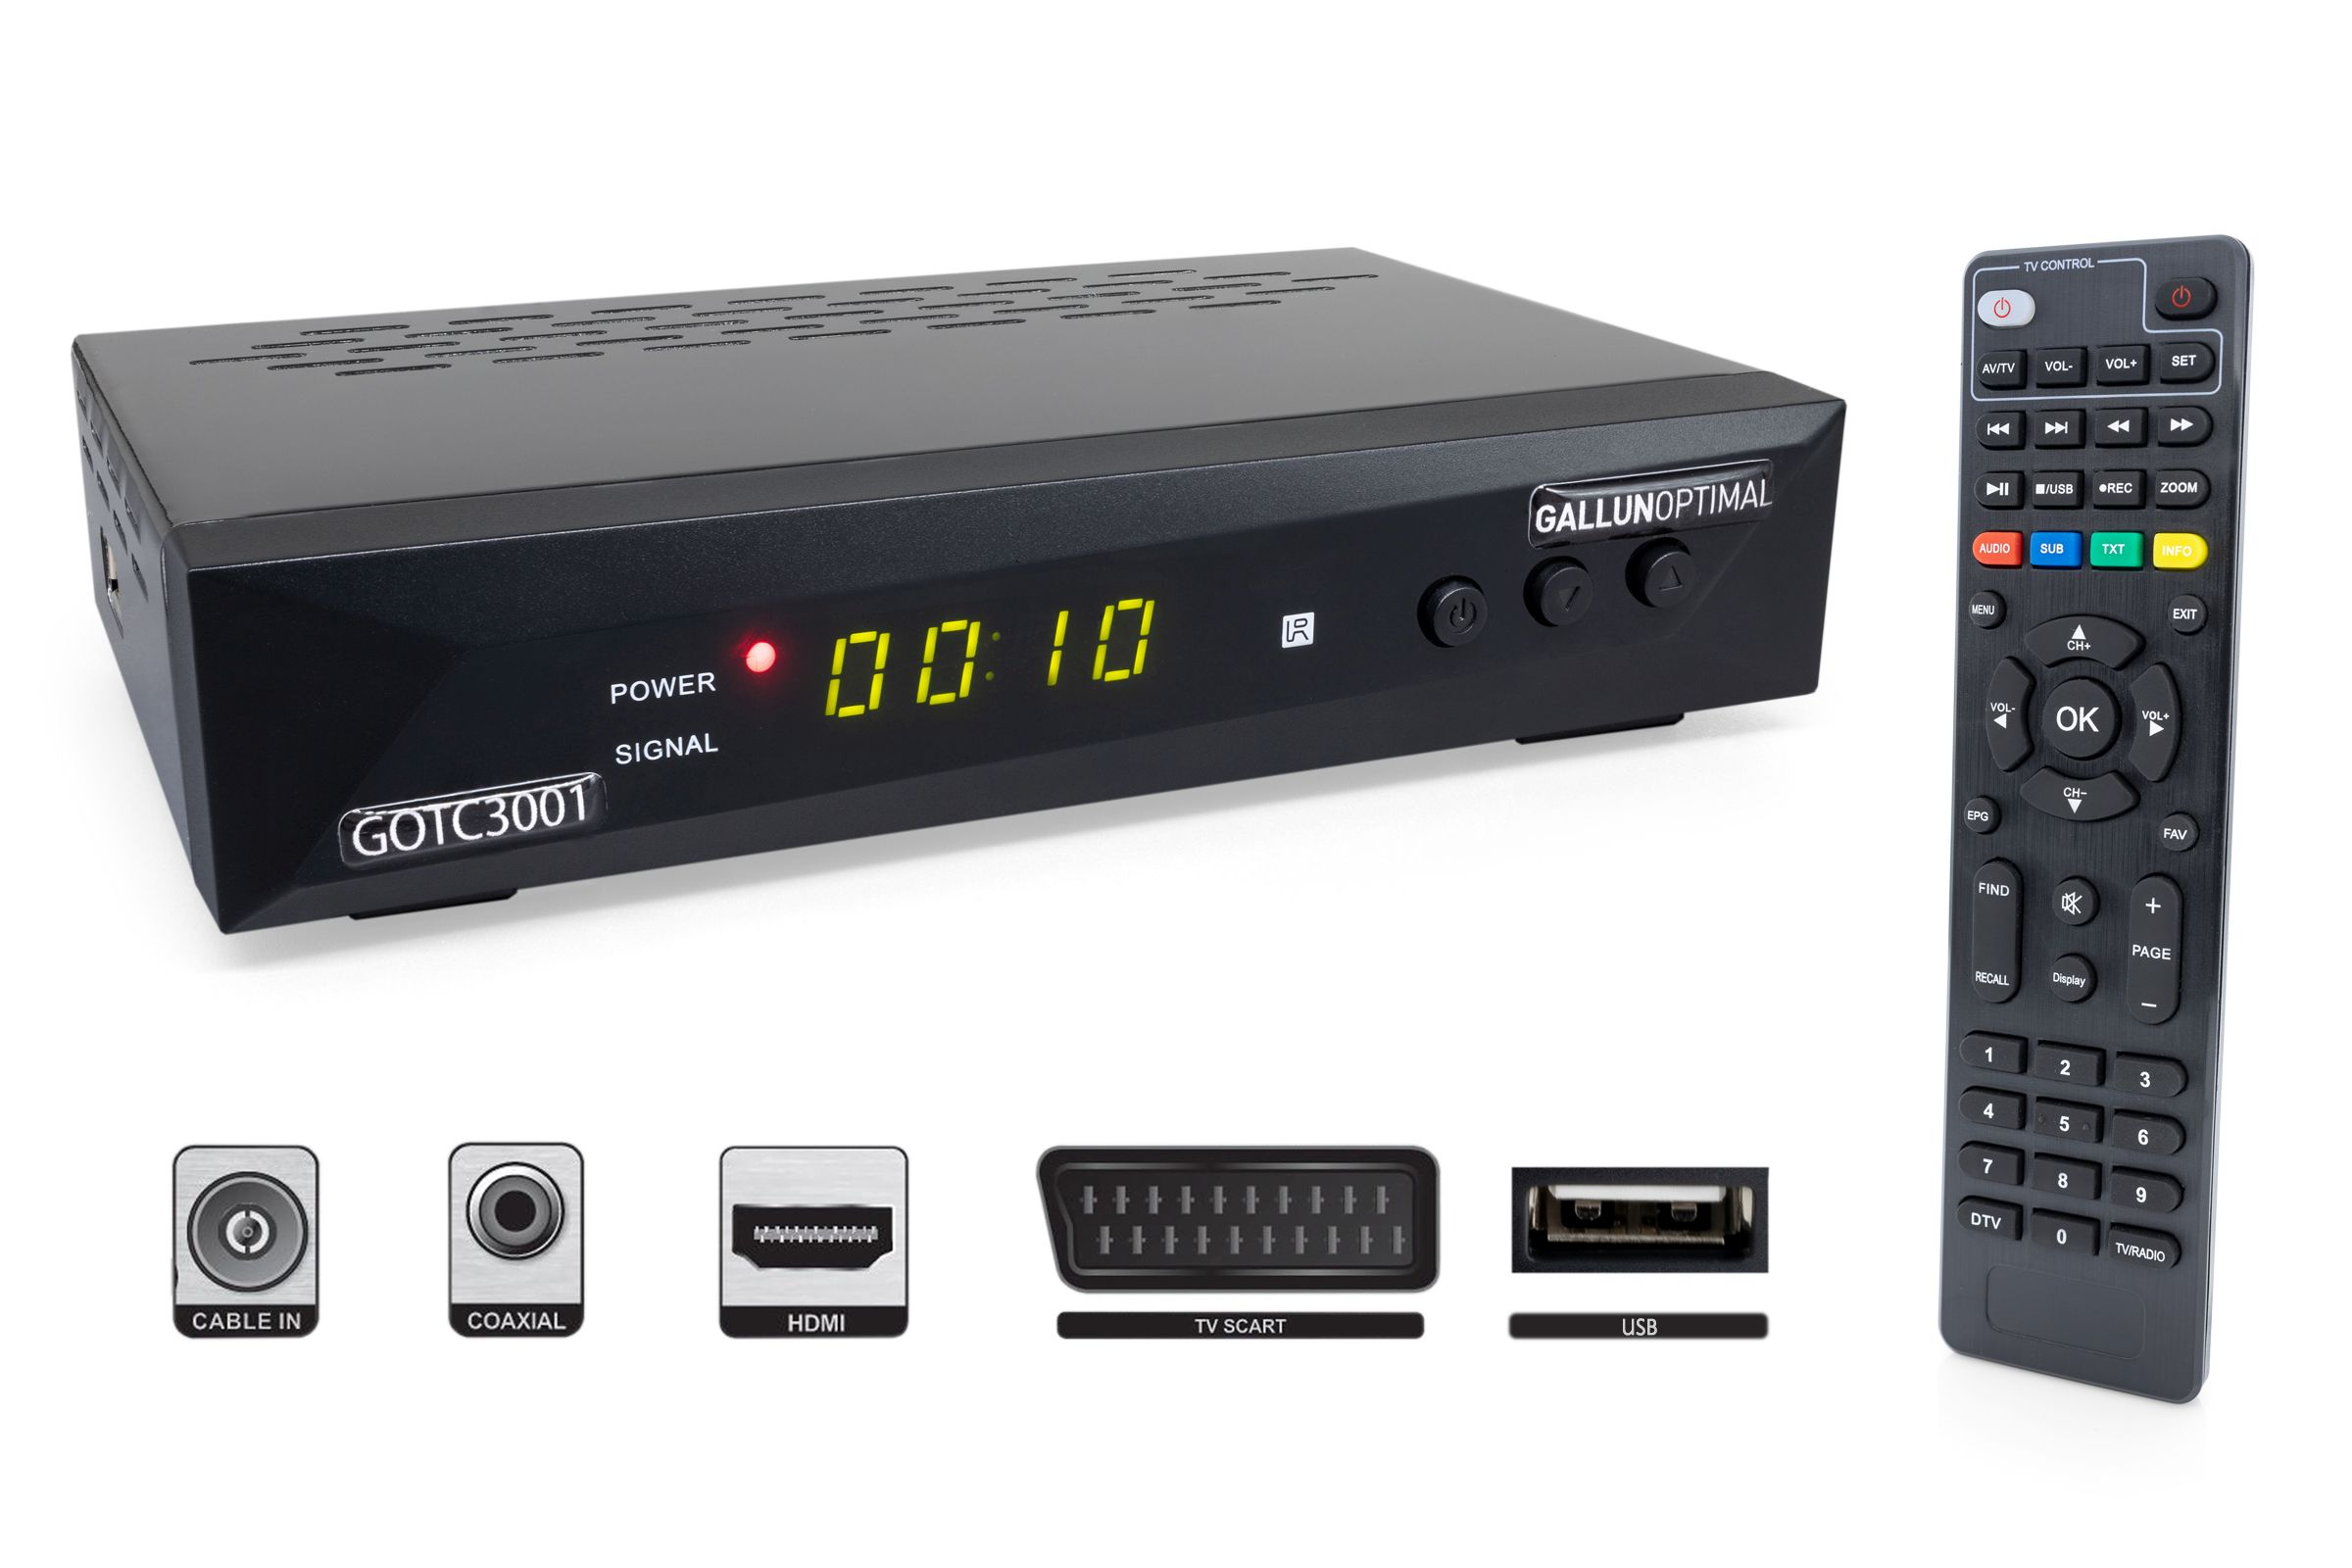 GALLUNOPTIMAL GOTC3001 schwarz) DVB-T, Kabelreceiver (HDTV, HD DVB-C, PVR-Funktion